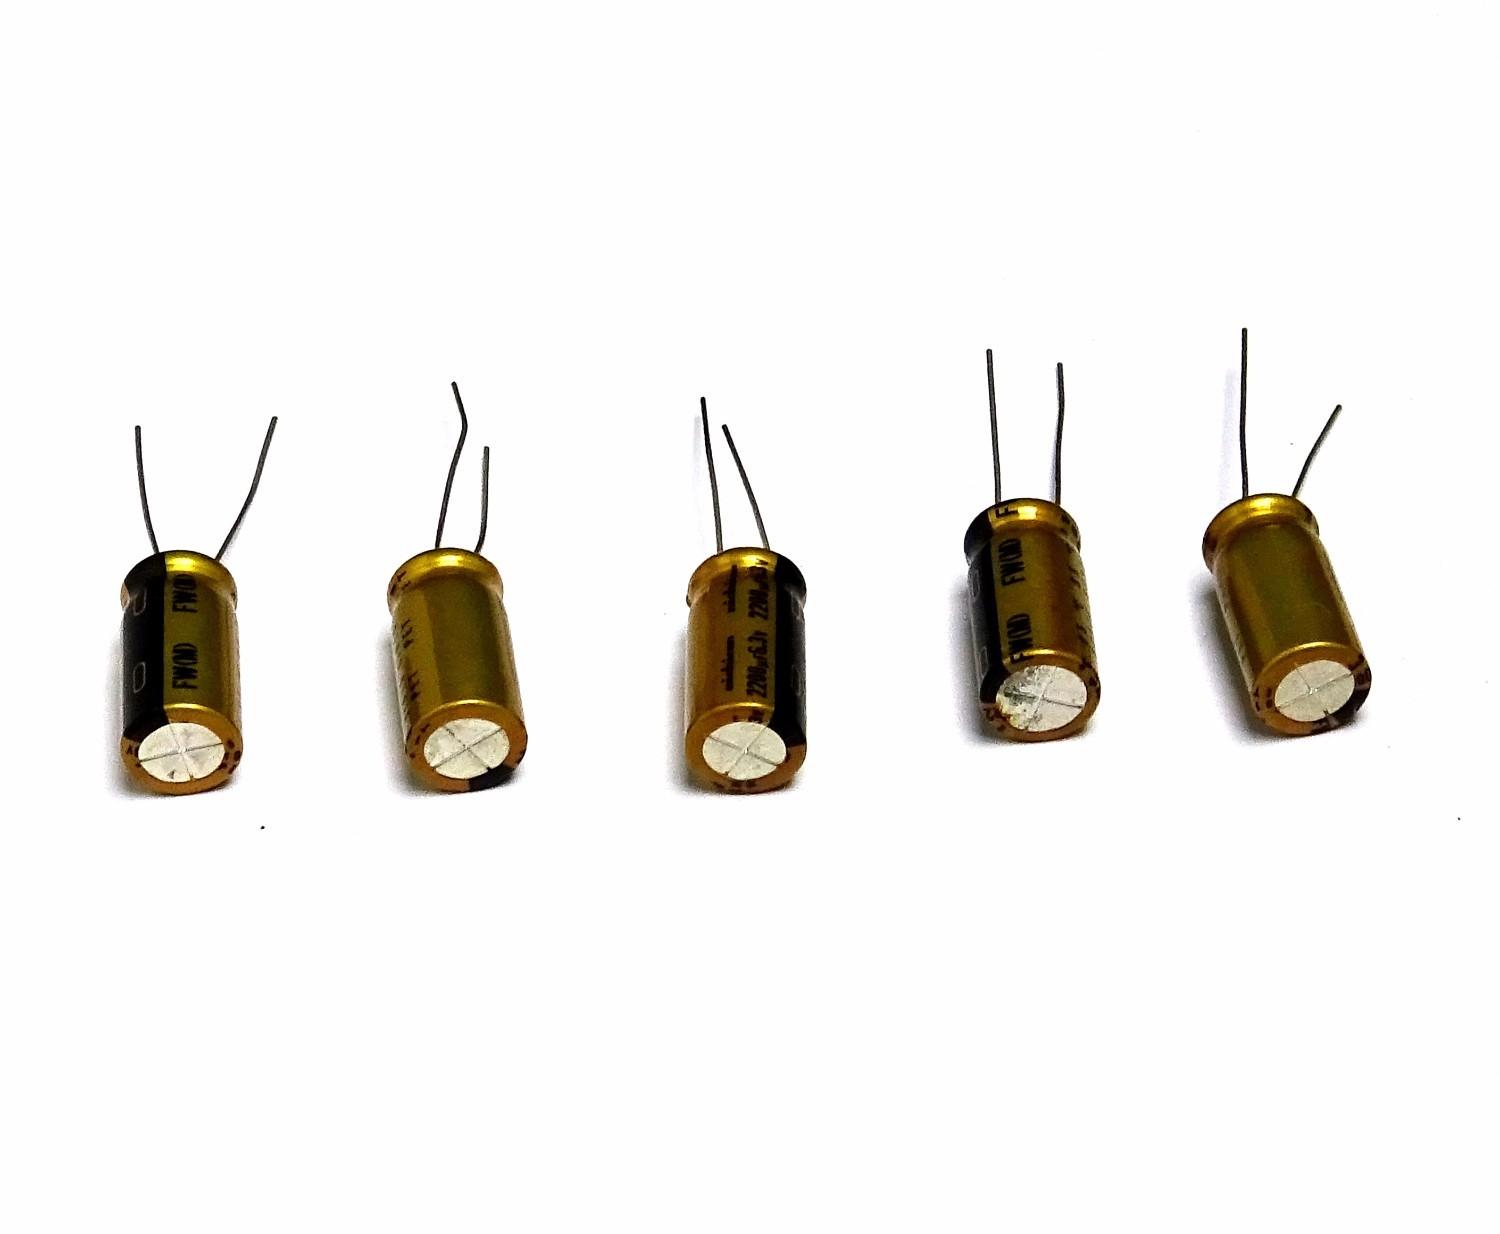 5x Nichicon Gold FW(M) for Audio Capacitor(M) 6.3V 2200uf 10 x 20mm 85°C - UK Seller